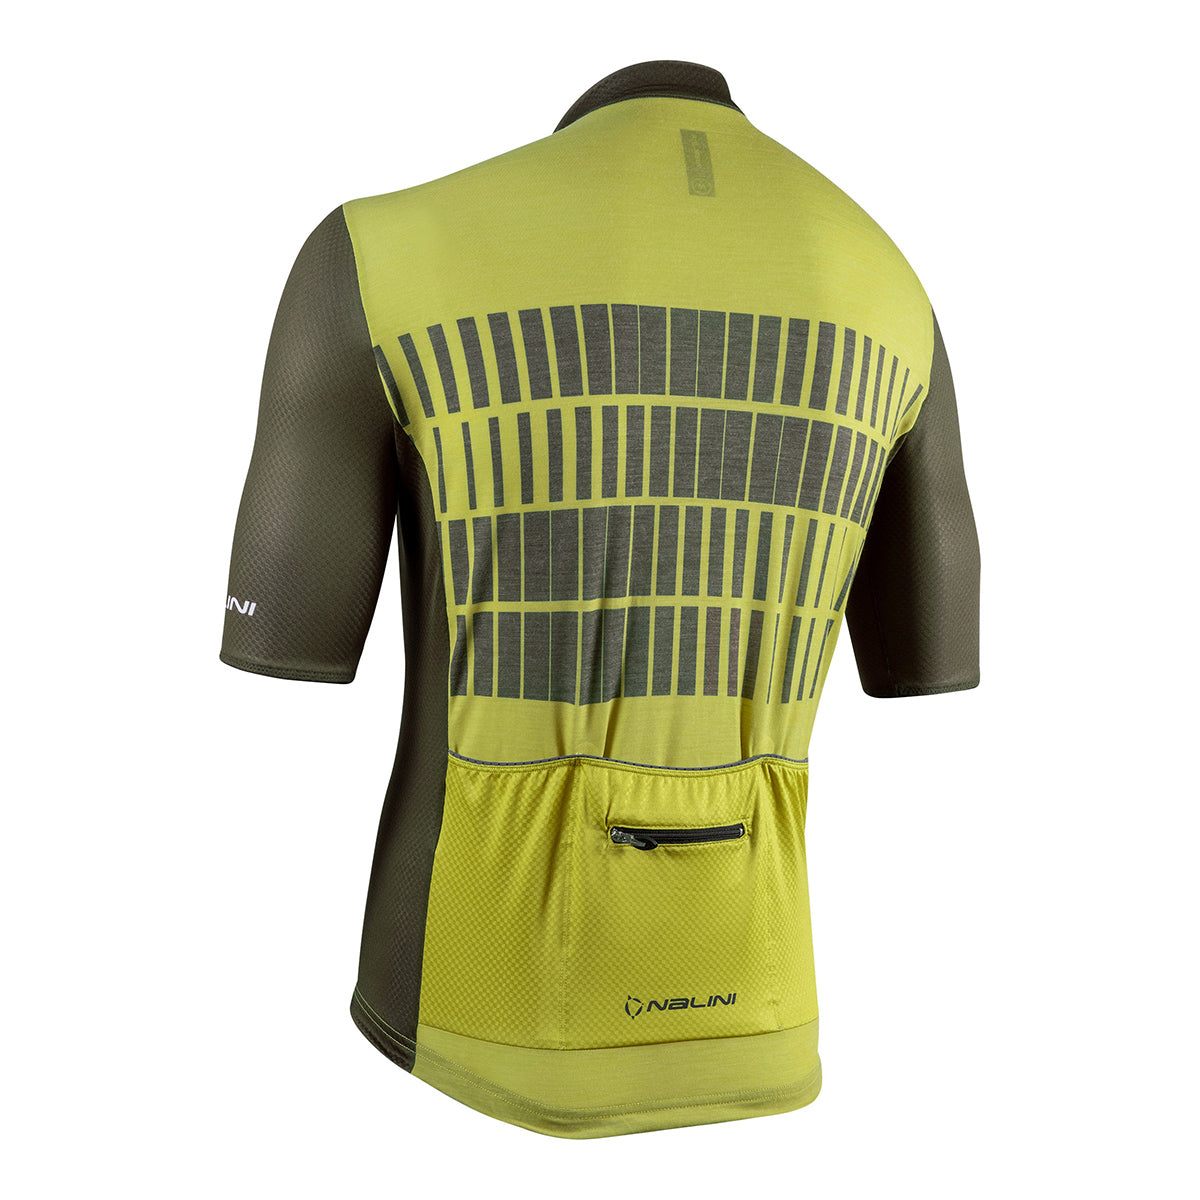 Nalini BAS WOOL GRAVEL Men's Cycling Jersey (Olive Green/Light Green) S, M, L, 2XL